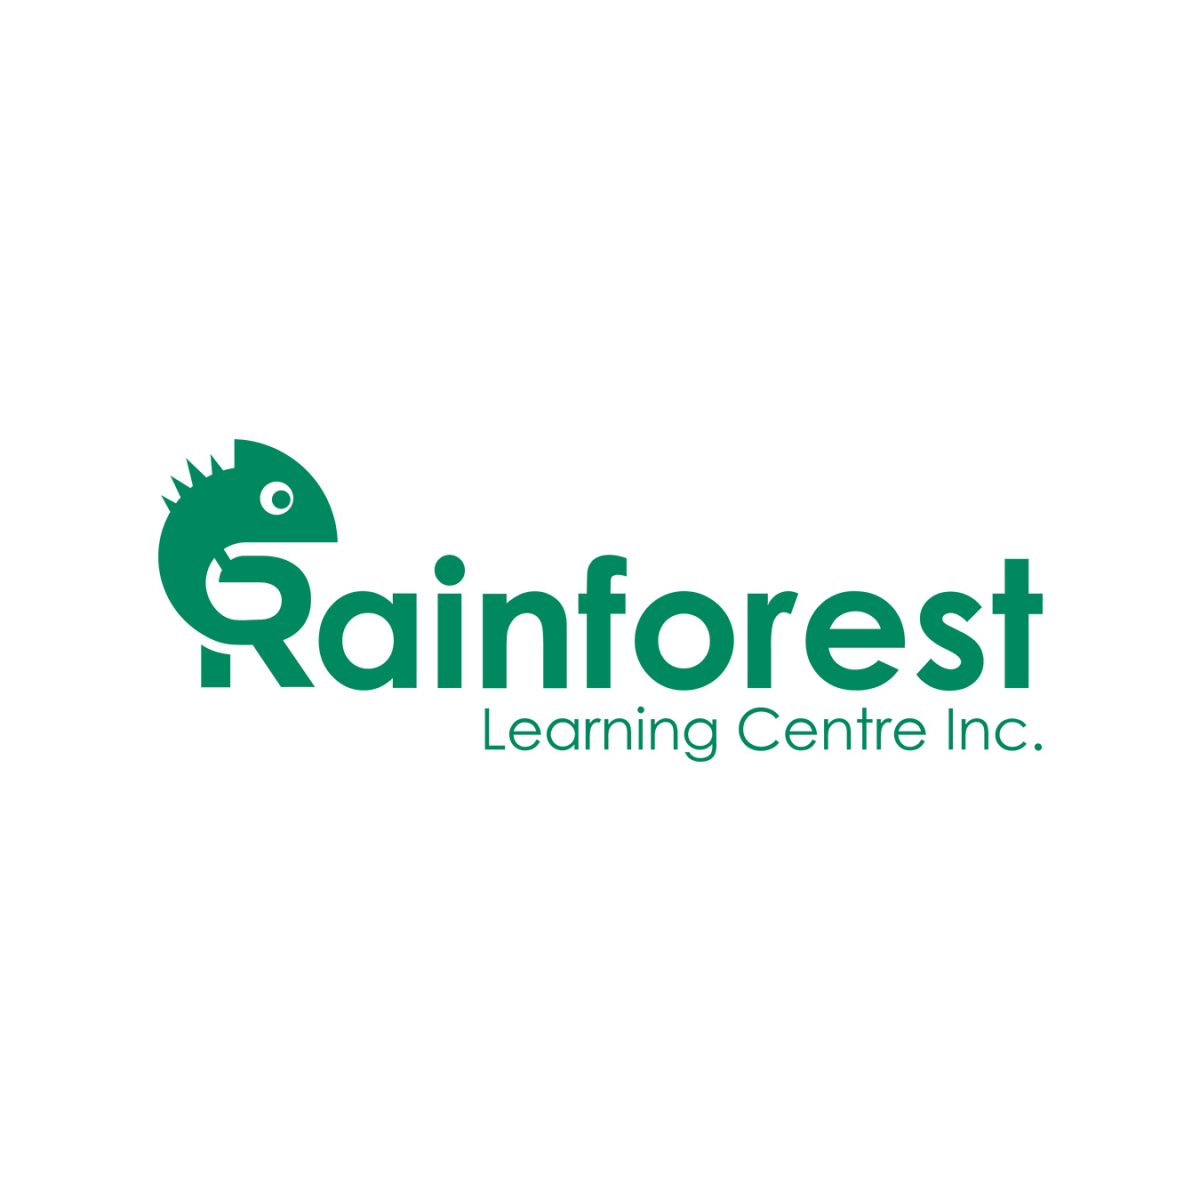 rainforest-word-logo-green-2020-square